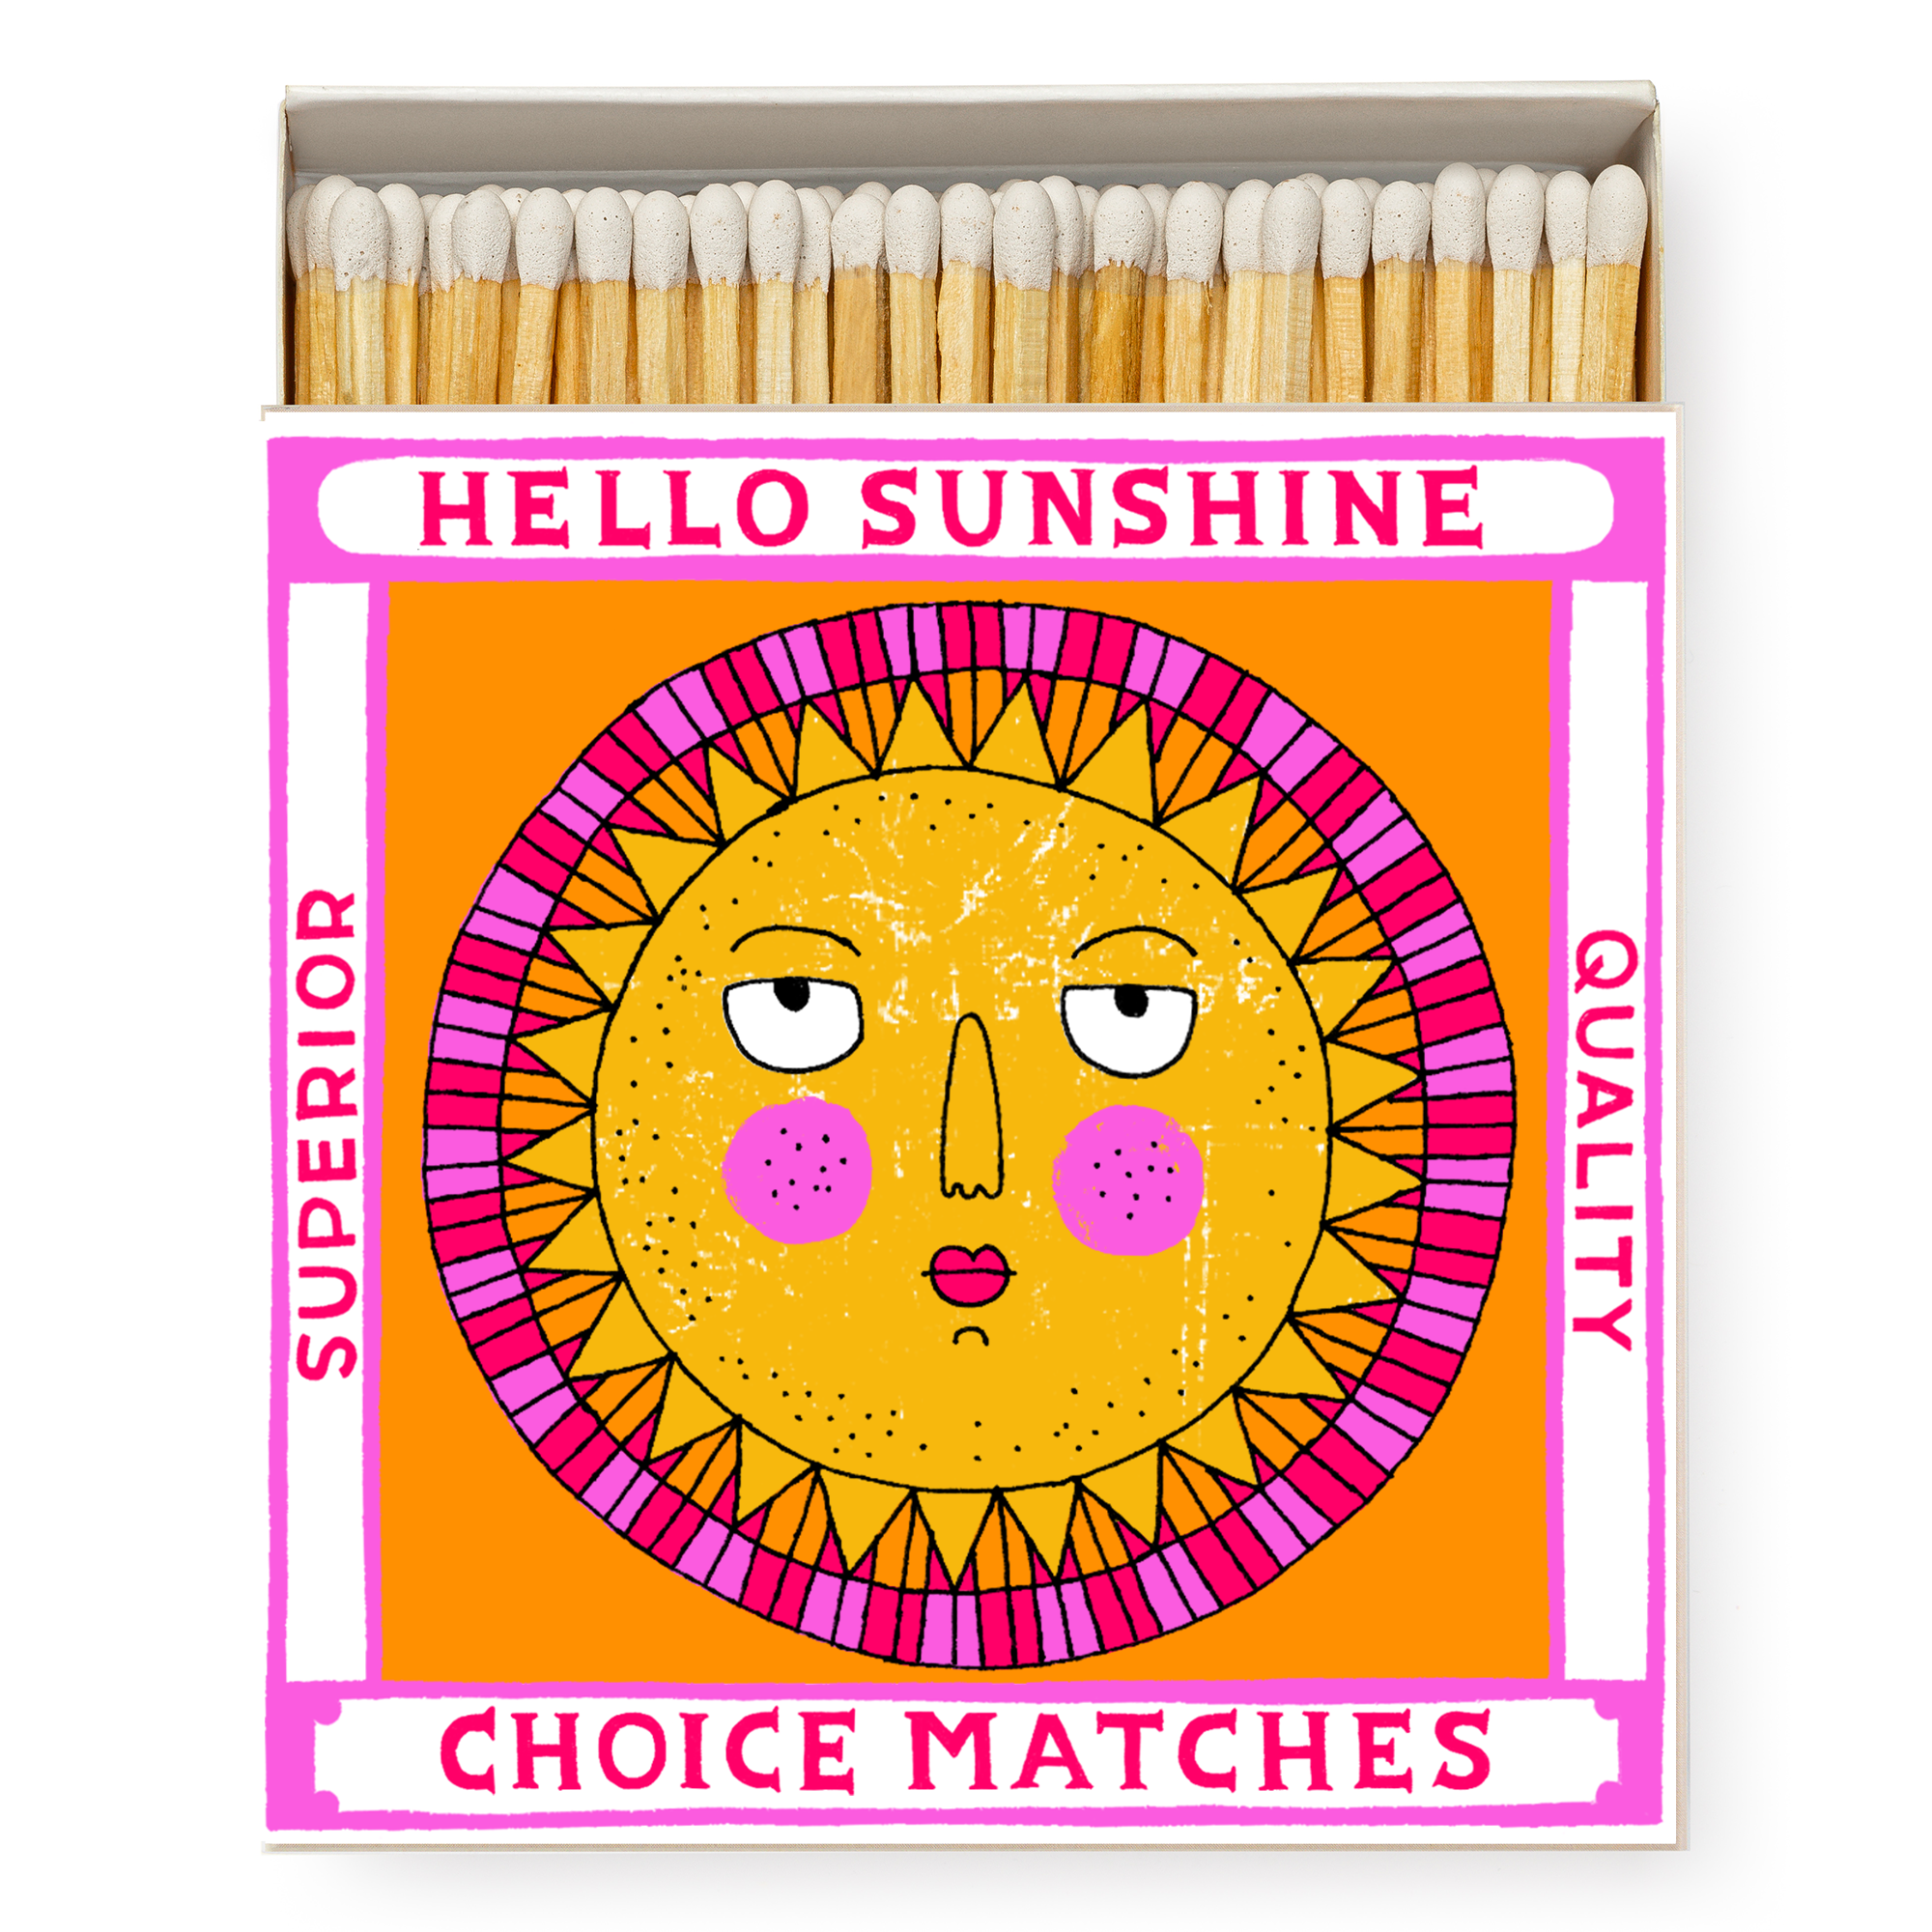 Long Matches - Square Box | Hello Sunshine | by Archivist - Lifestory